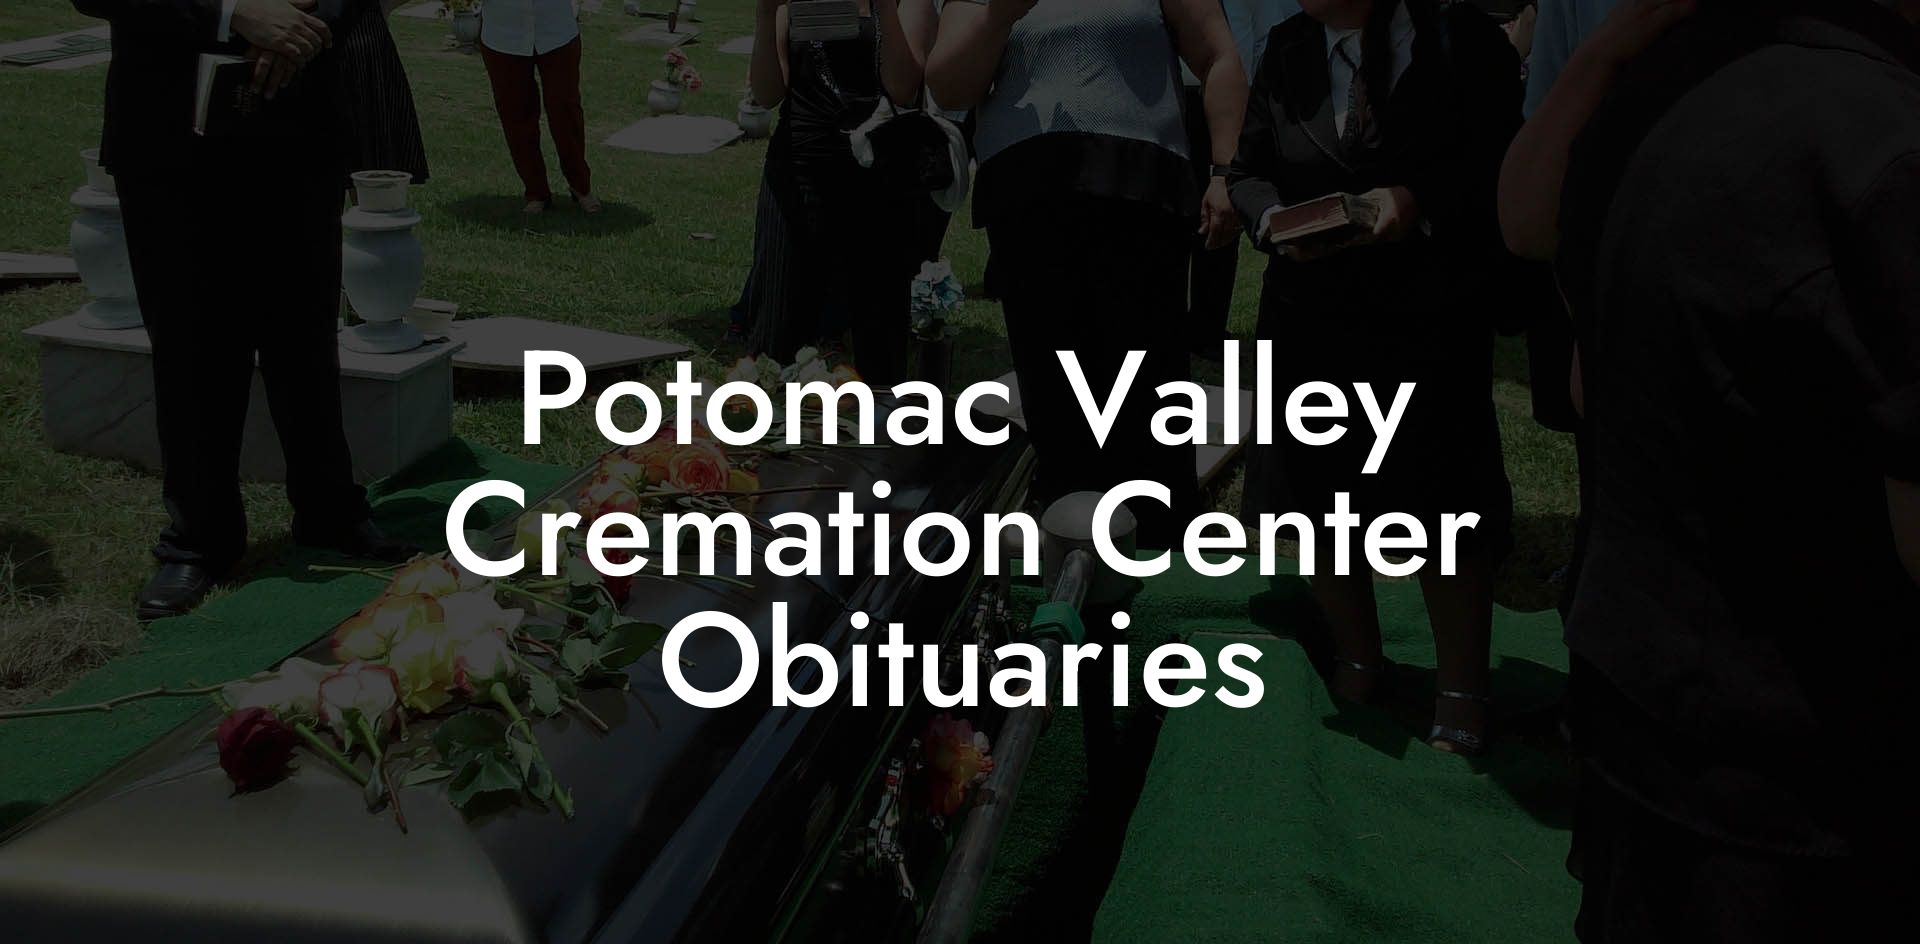 Potomac Valley Cremation Center Obituaries